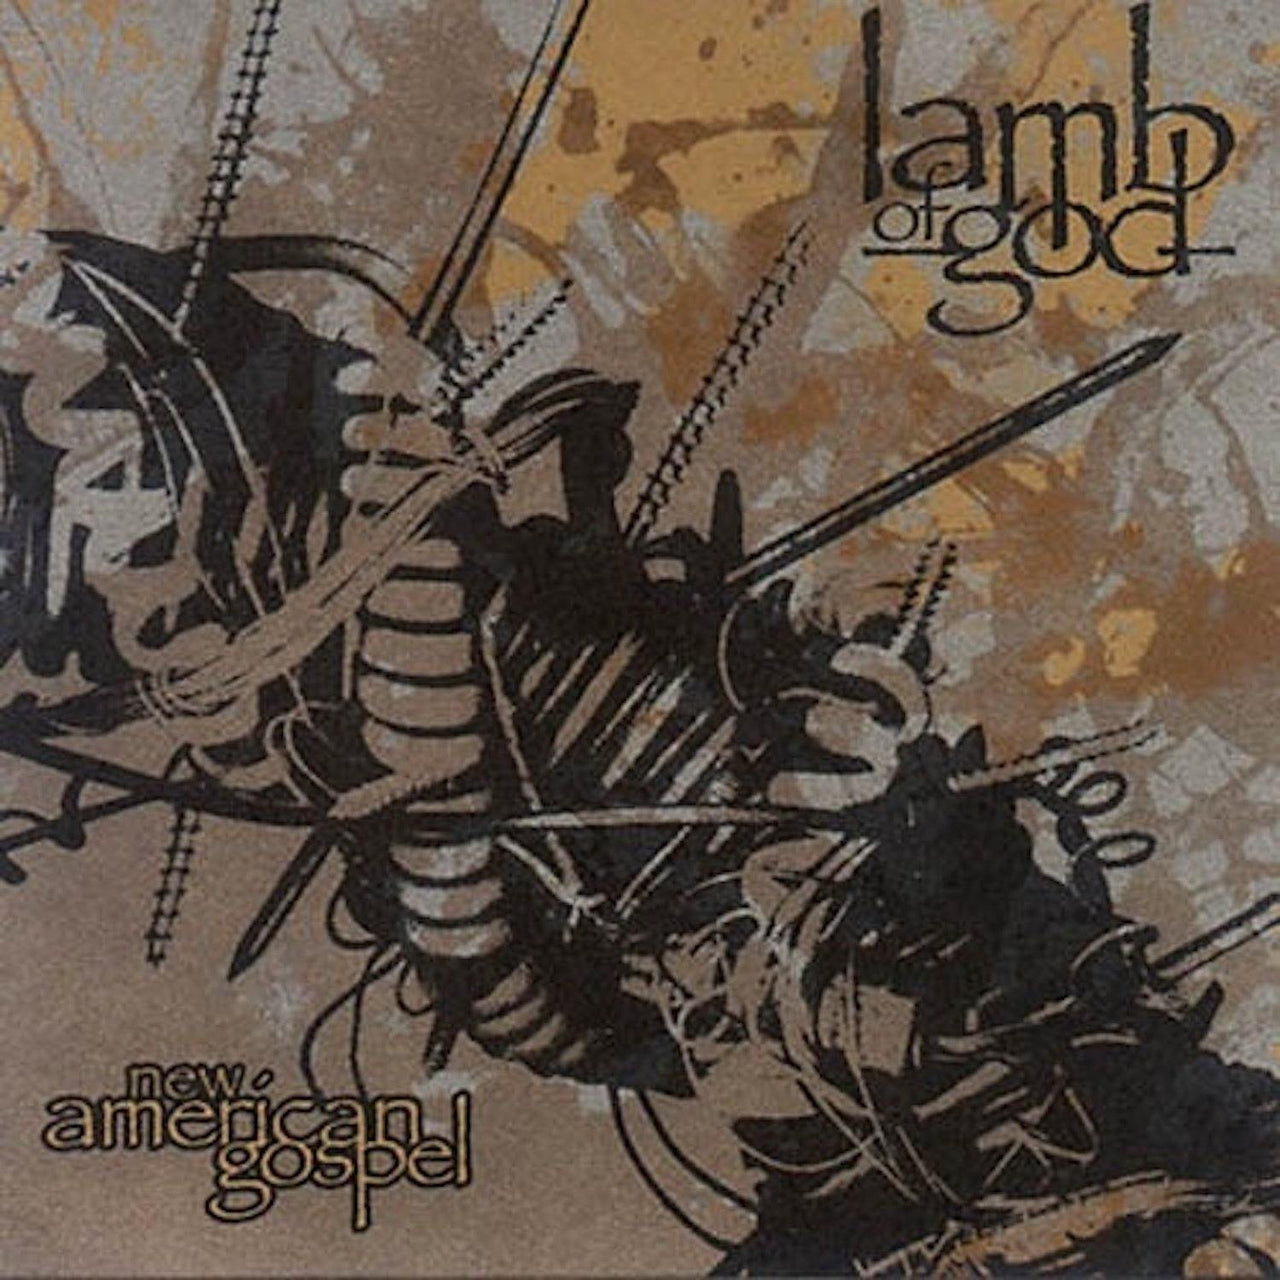 Buy – Lamb of God "New American Gospel" 12" – Band & Music Merch – Cold Cuts Merch